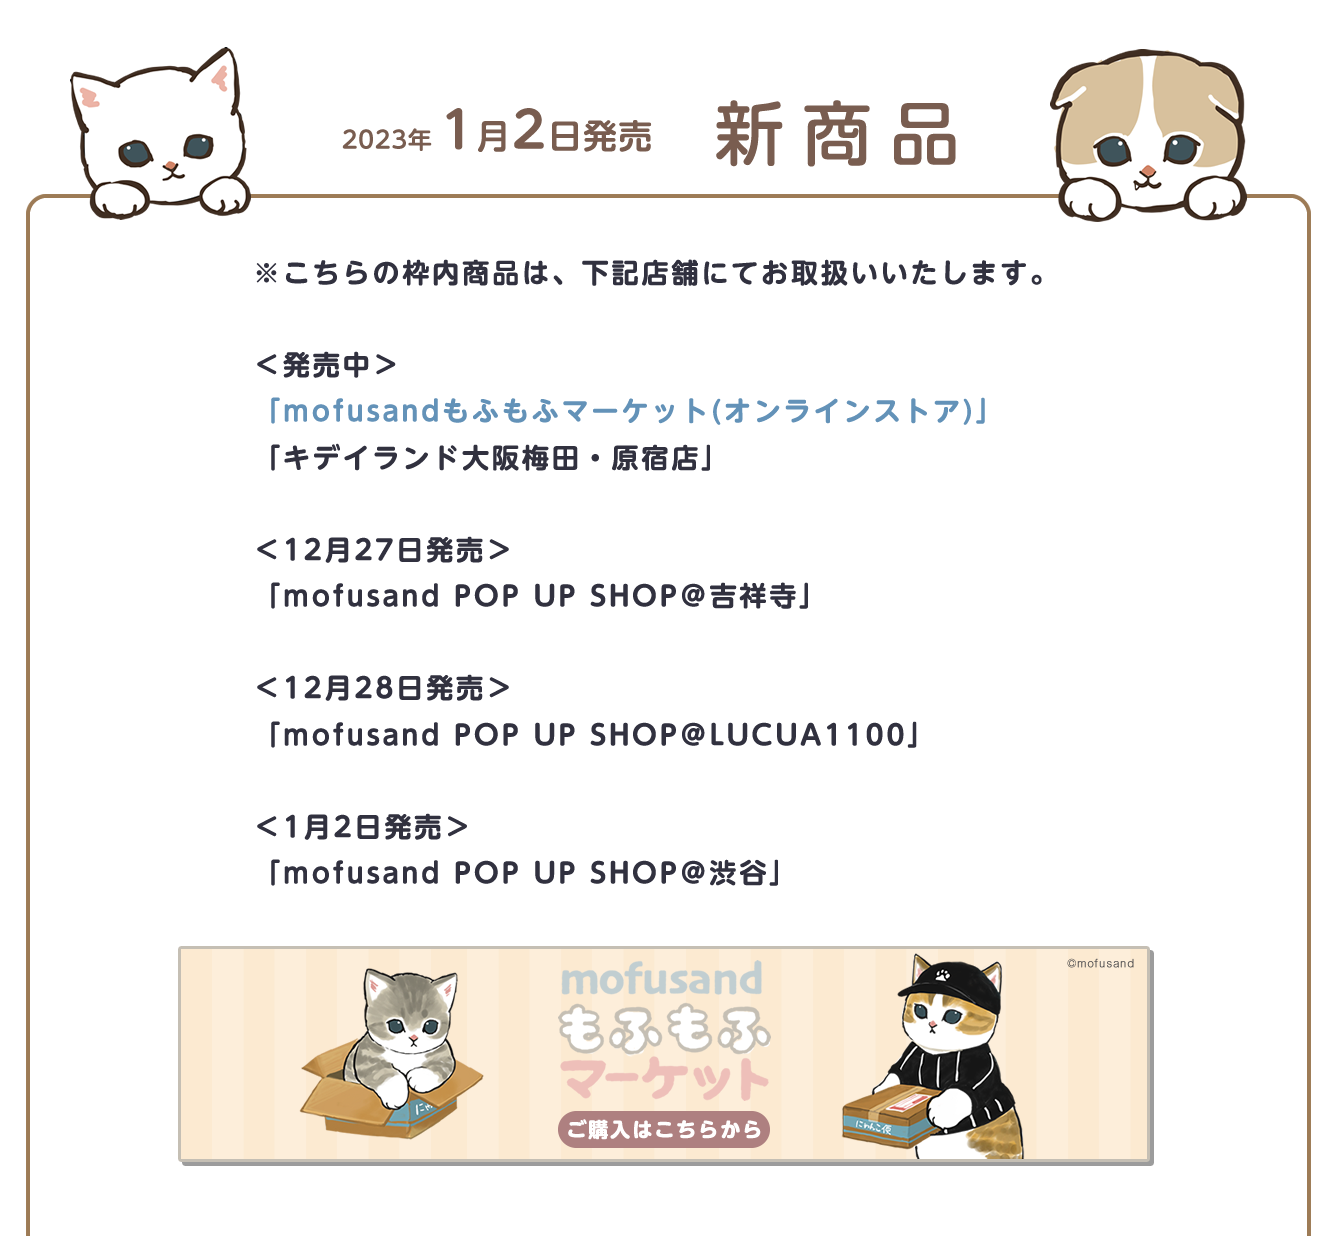 mofusand POP UP SHOP SHIBUYA109渋谷店(2023/1/2(月祝)～1/22(日